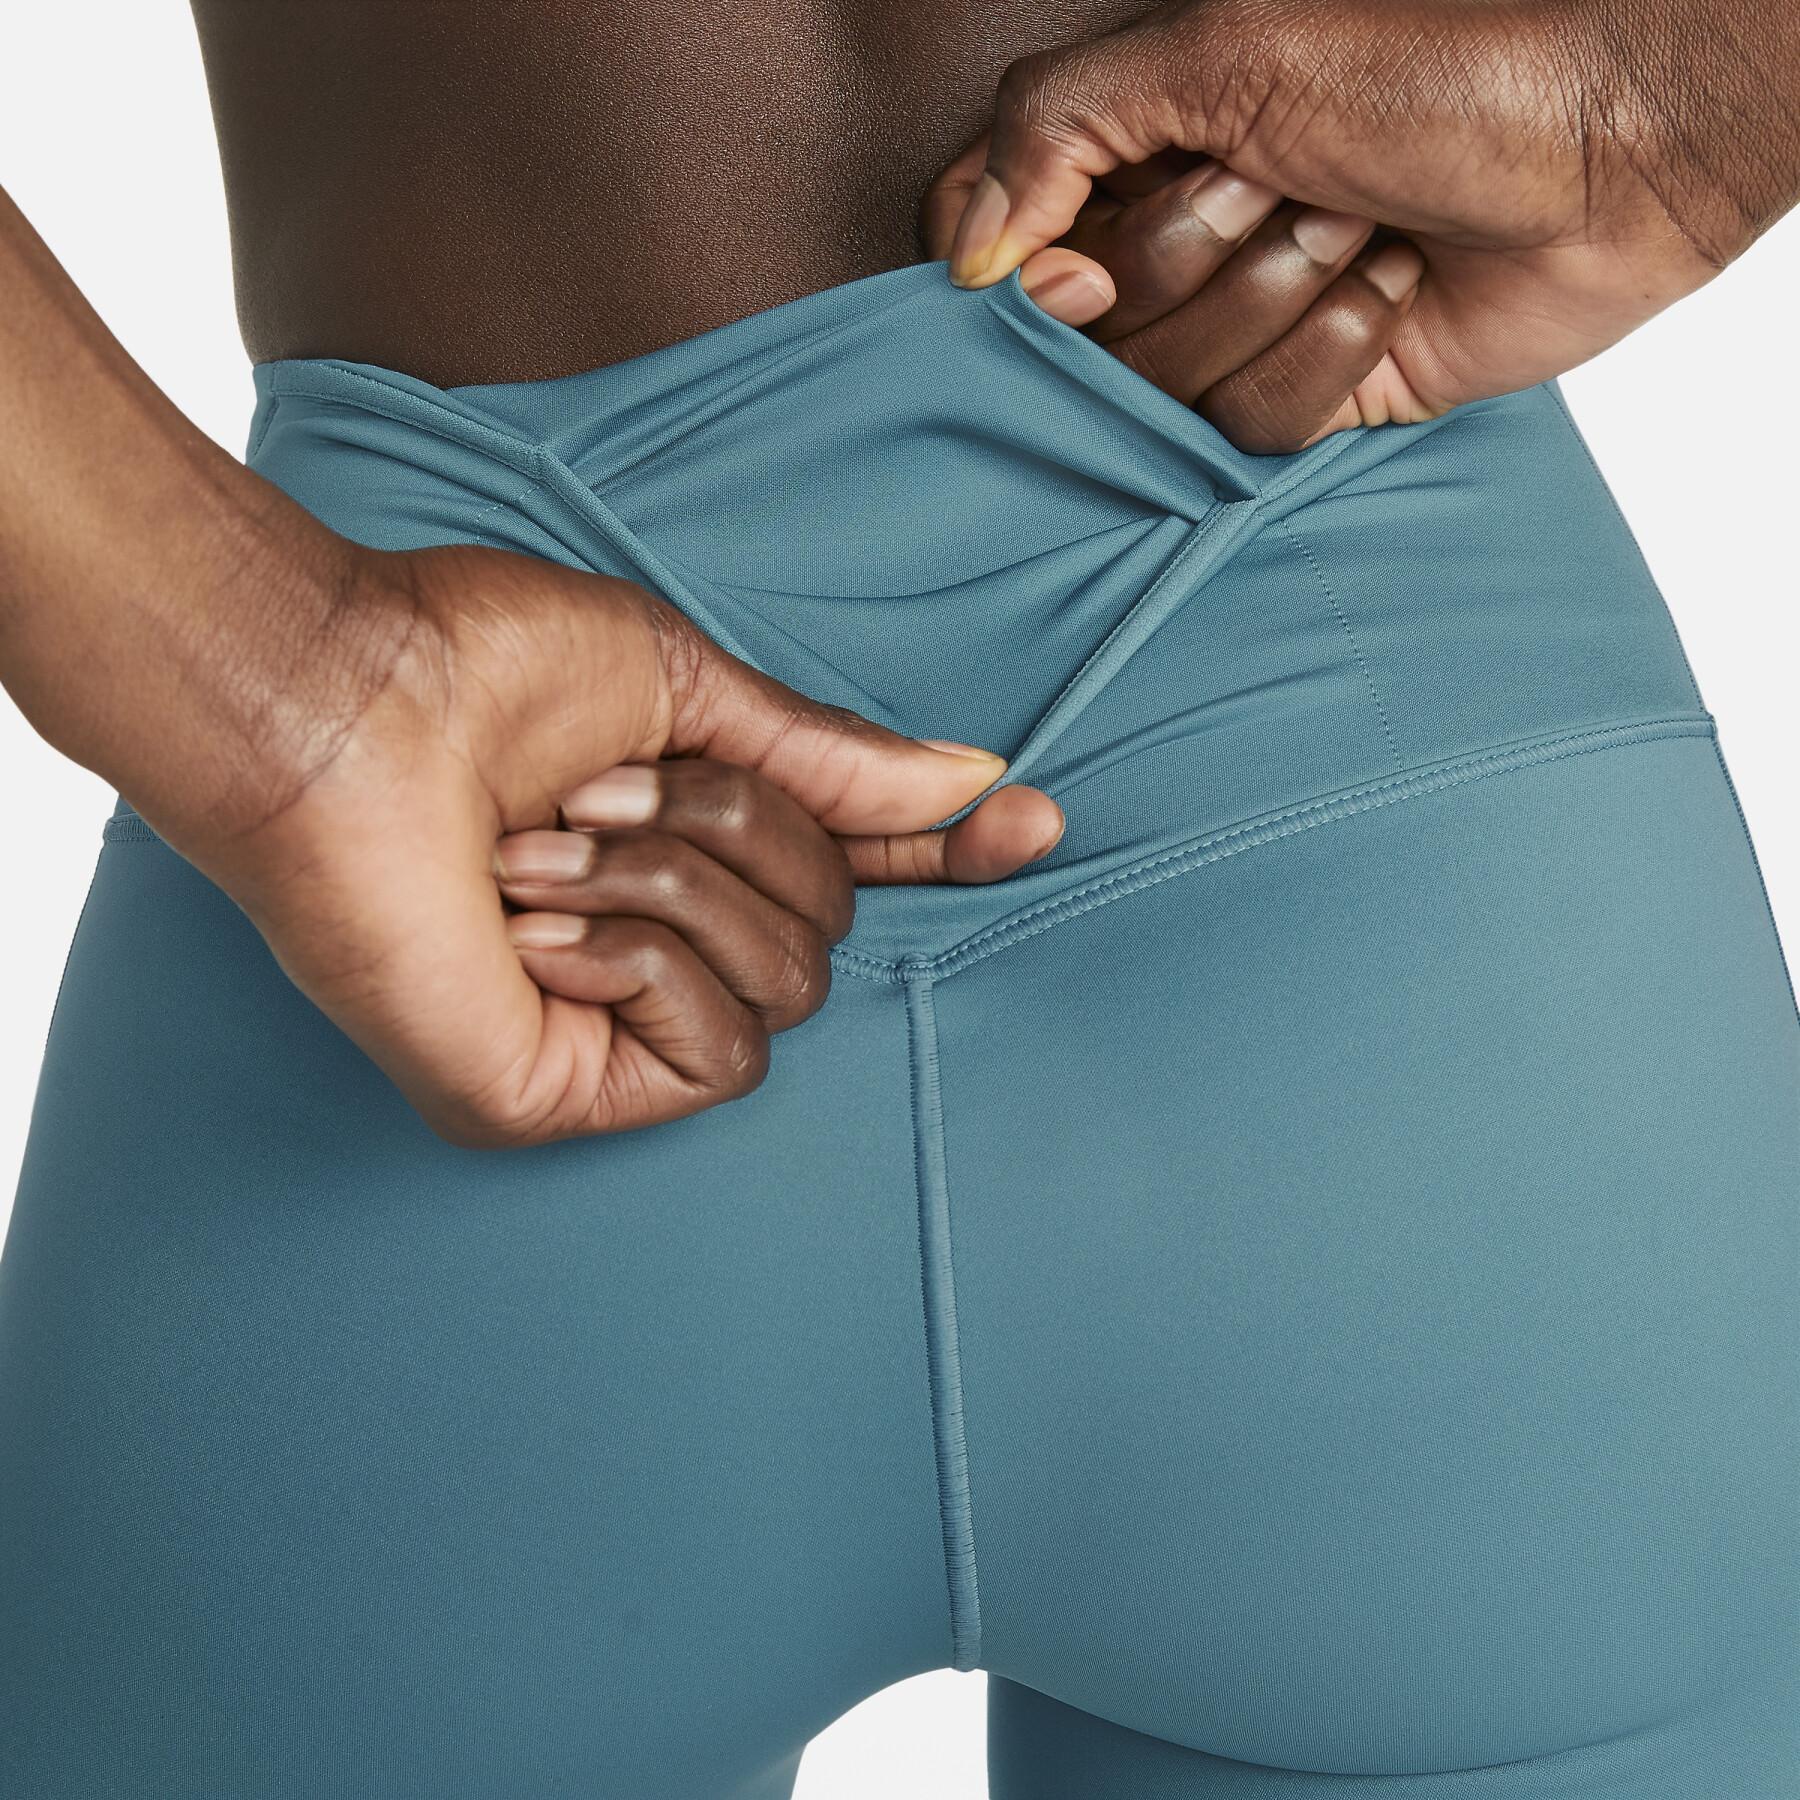 Pantalones cortos de mujer Nike Dri-Fit Go MR 8IN